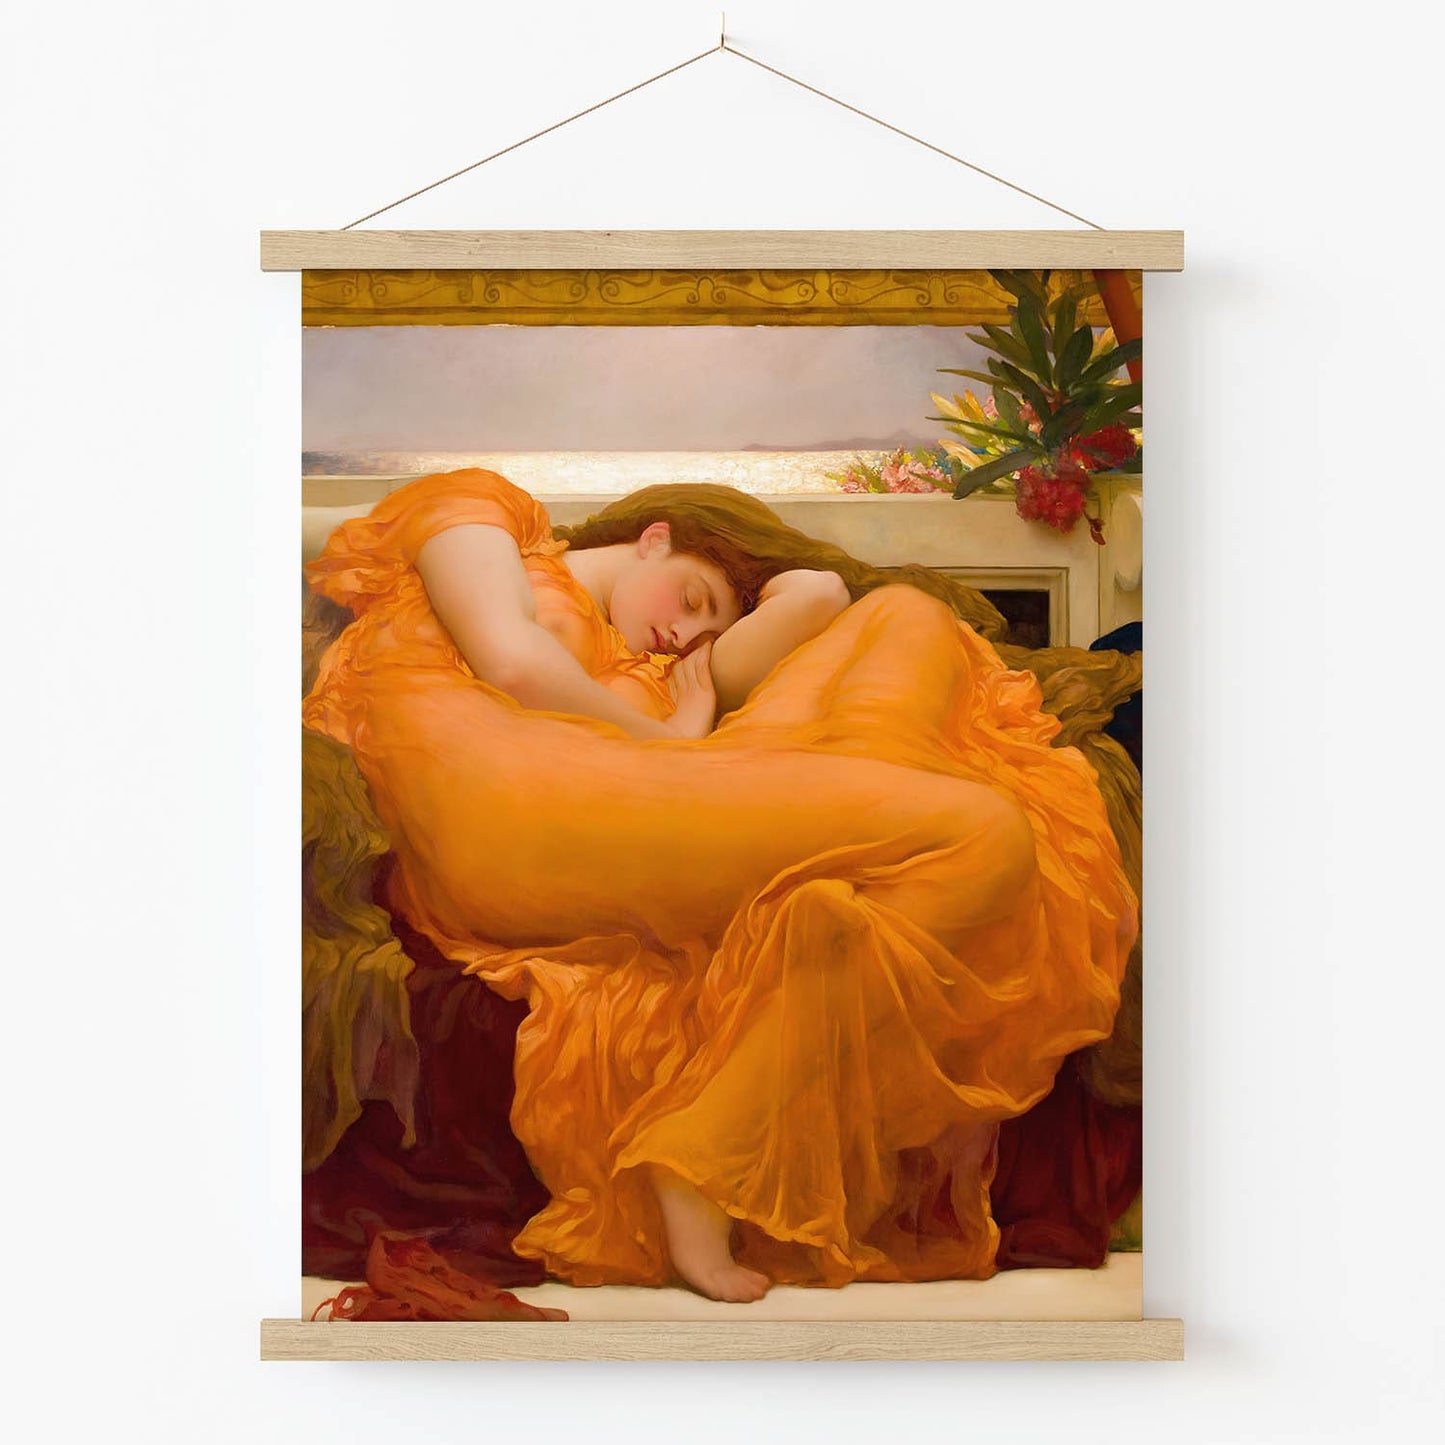 Woman Sleeping in a Bright Orange Dress Art Print in Wood Hanger Frame on Wall